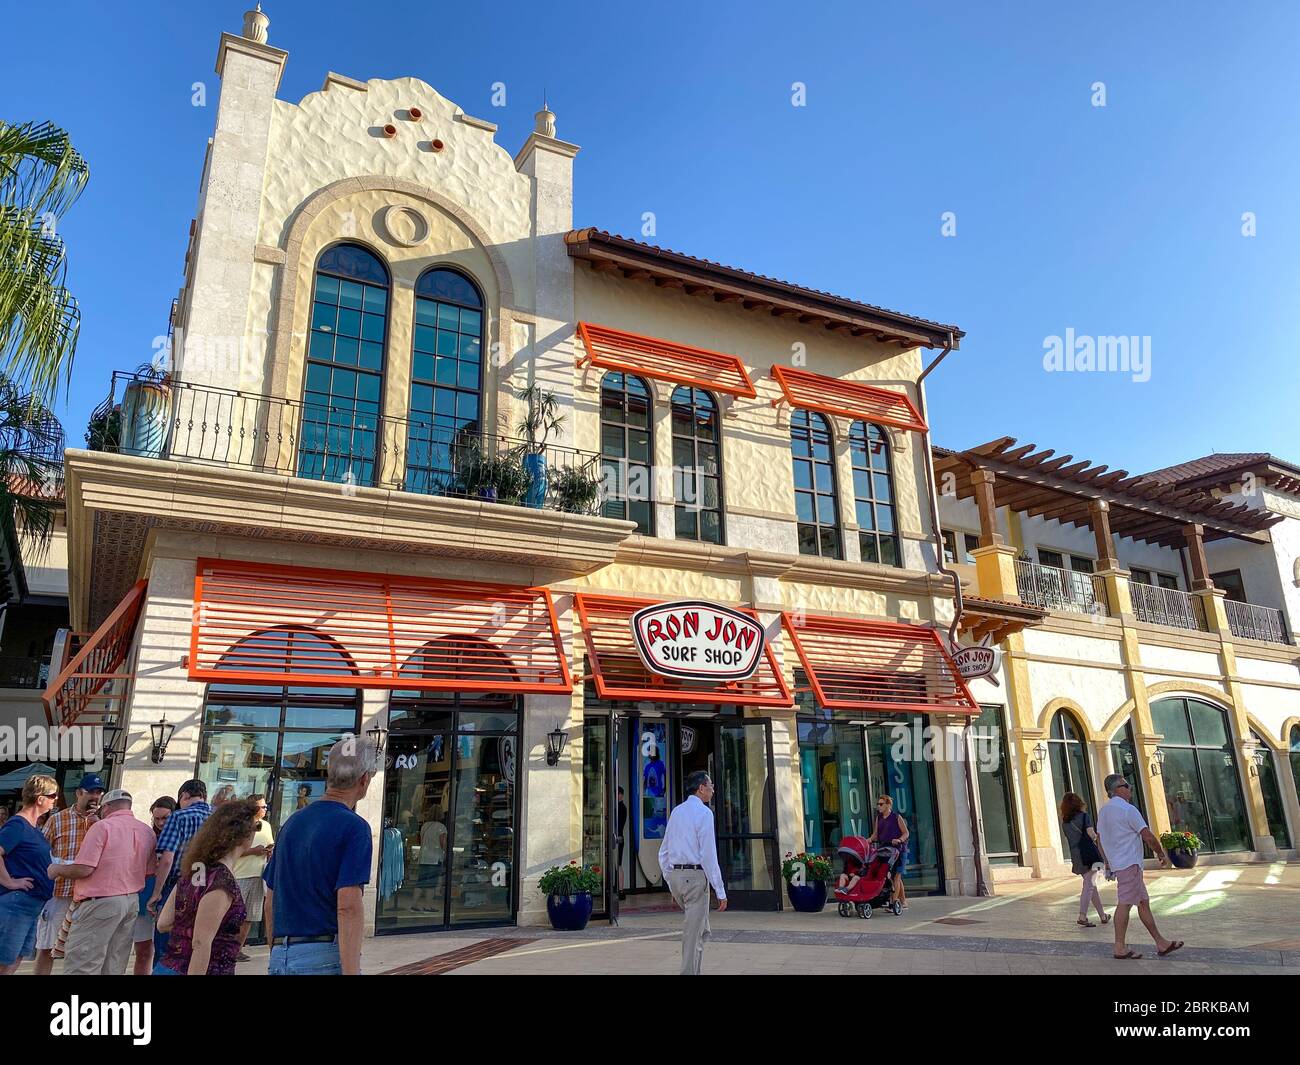 Orlando, FL/USA-2/13/20: The Ron Jon storefront at an outdoor mall in Orlando, Florida. Stock Photo